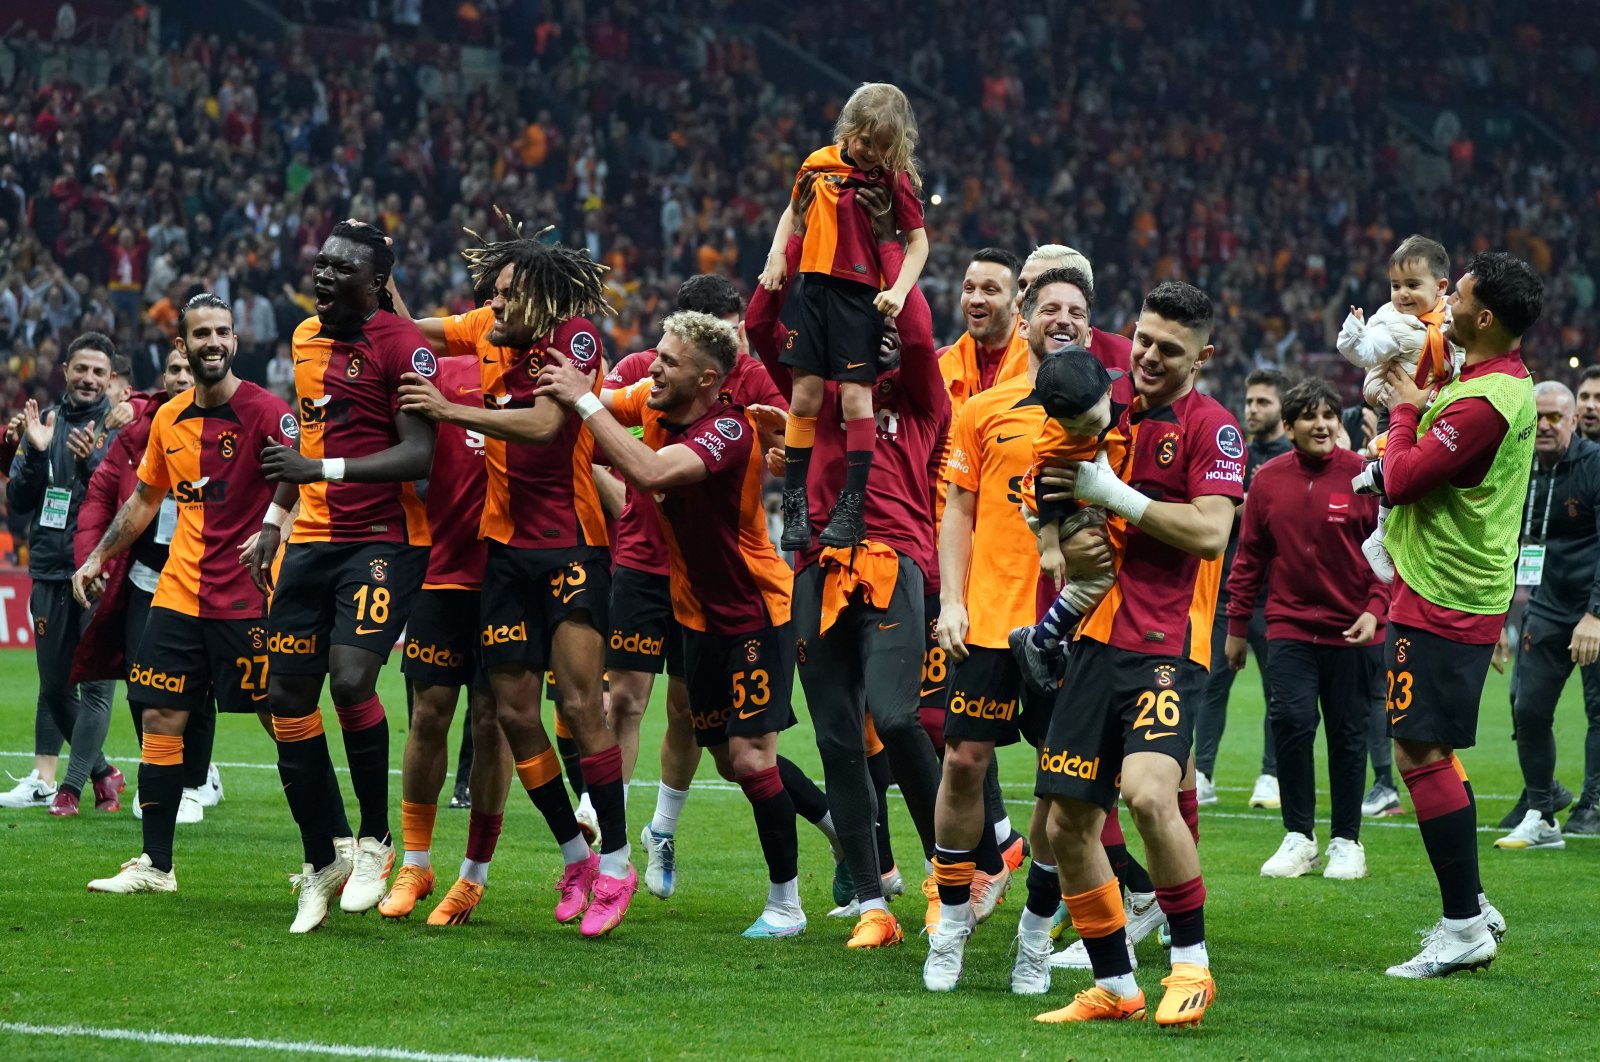 Galatasaray players celebrate after winning the Süper Lig match against Sivasspor at Nef Stadium, Istanbul, Türkiye, May 20, 2023. (IHA Photo)